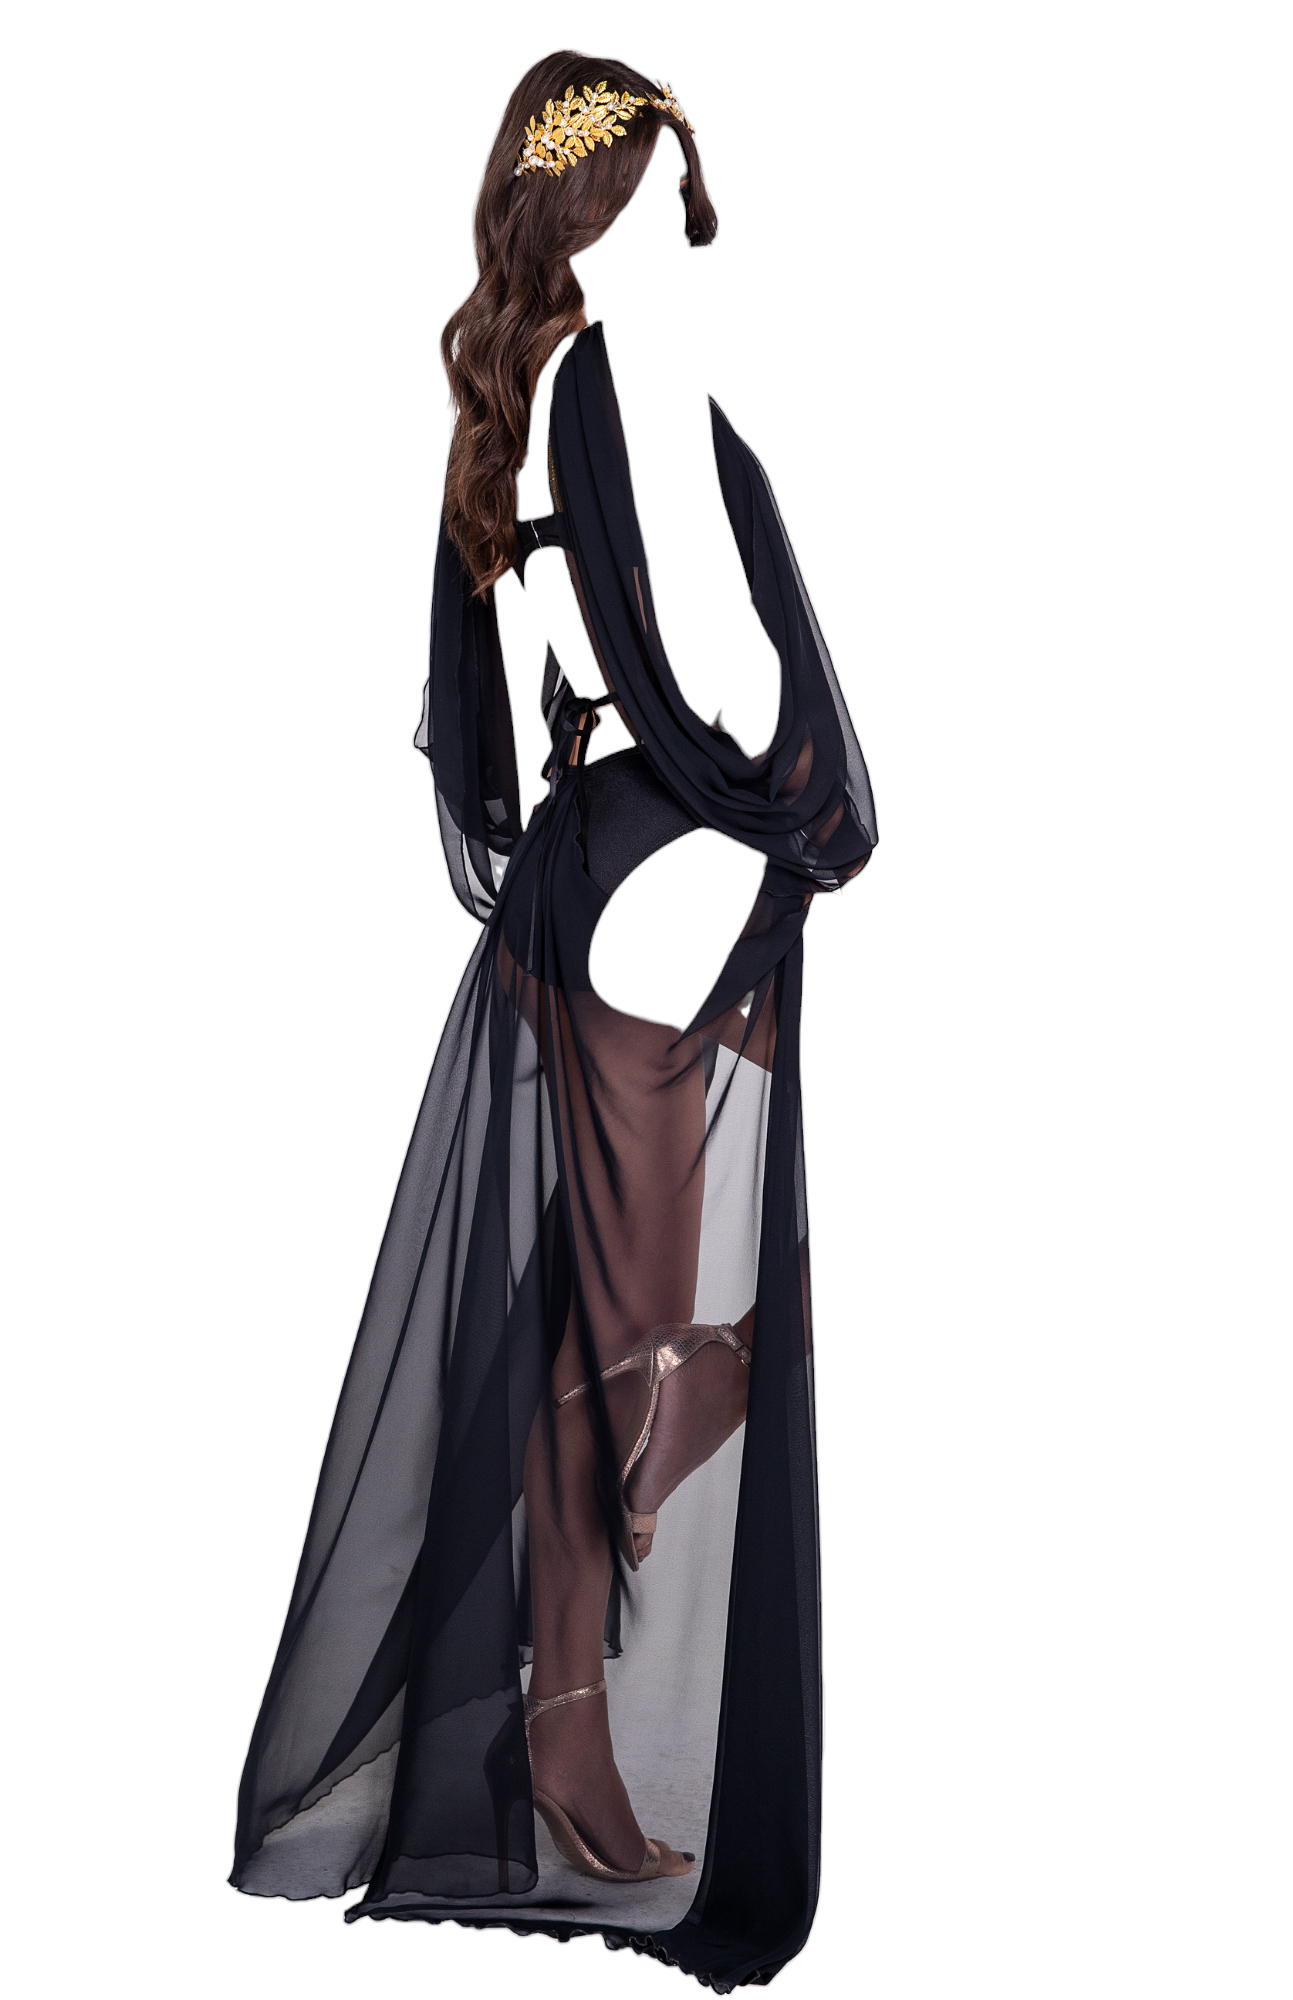 Roma Costume 2 PC Divine Goddess Bodysuit with Train Costume Black/Gold